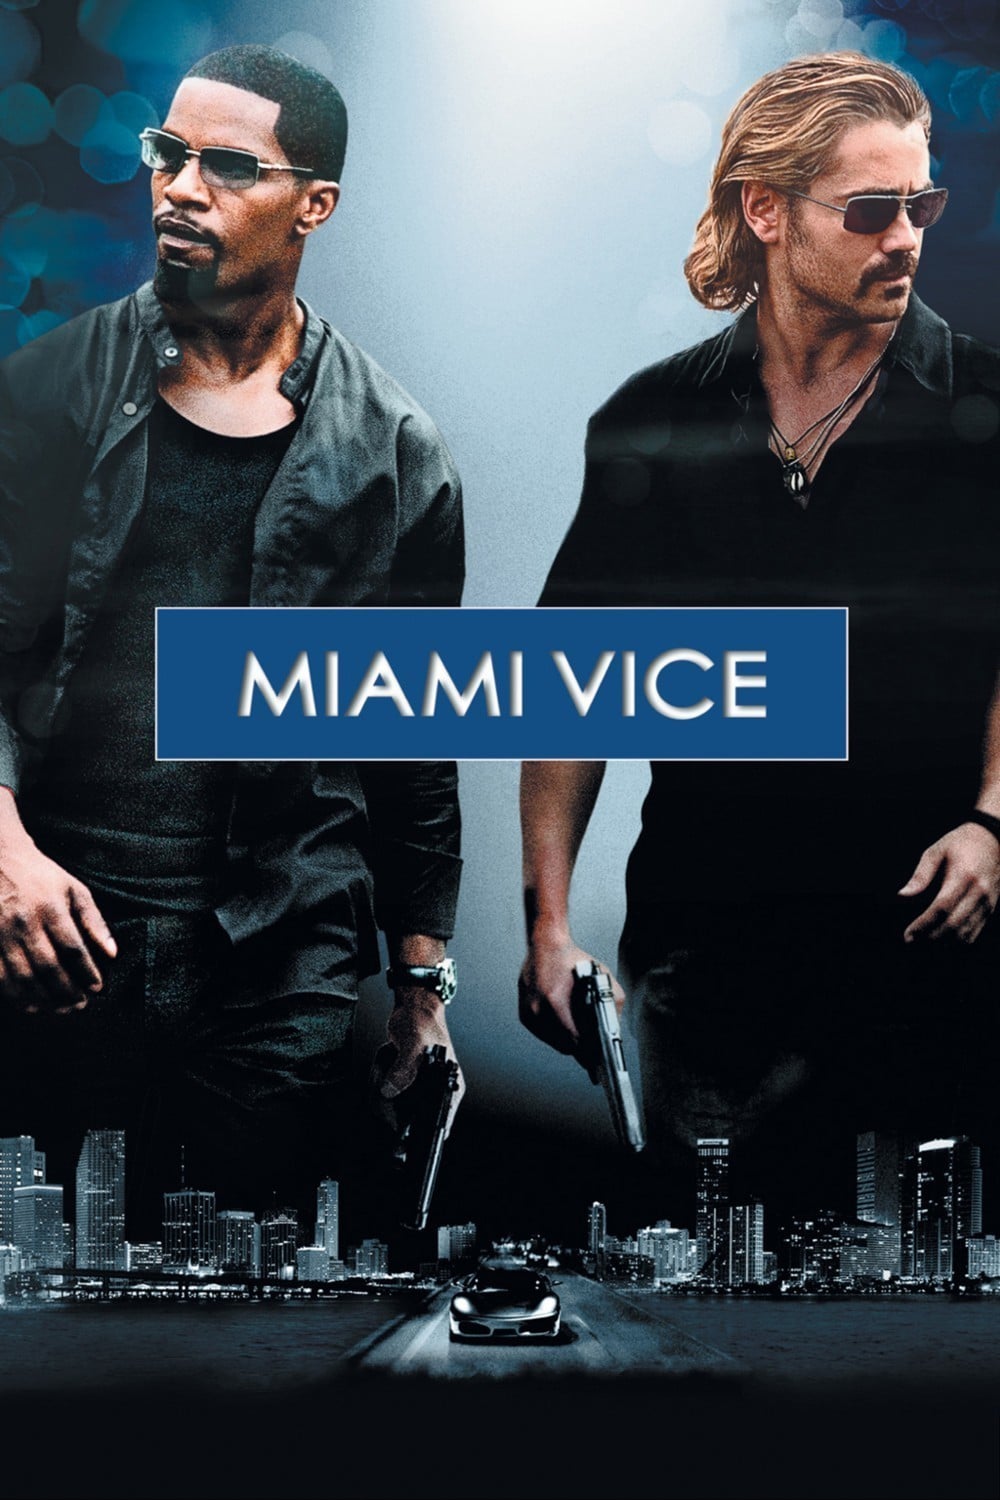 Plakat von "Miami Vice"